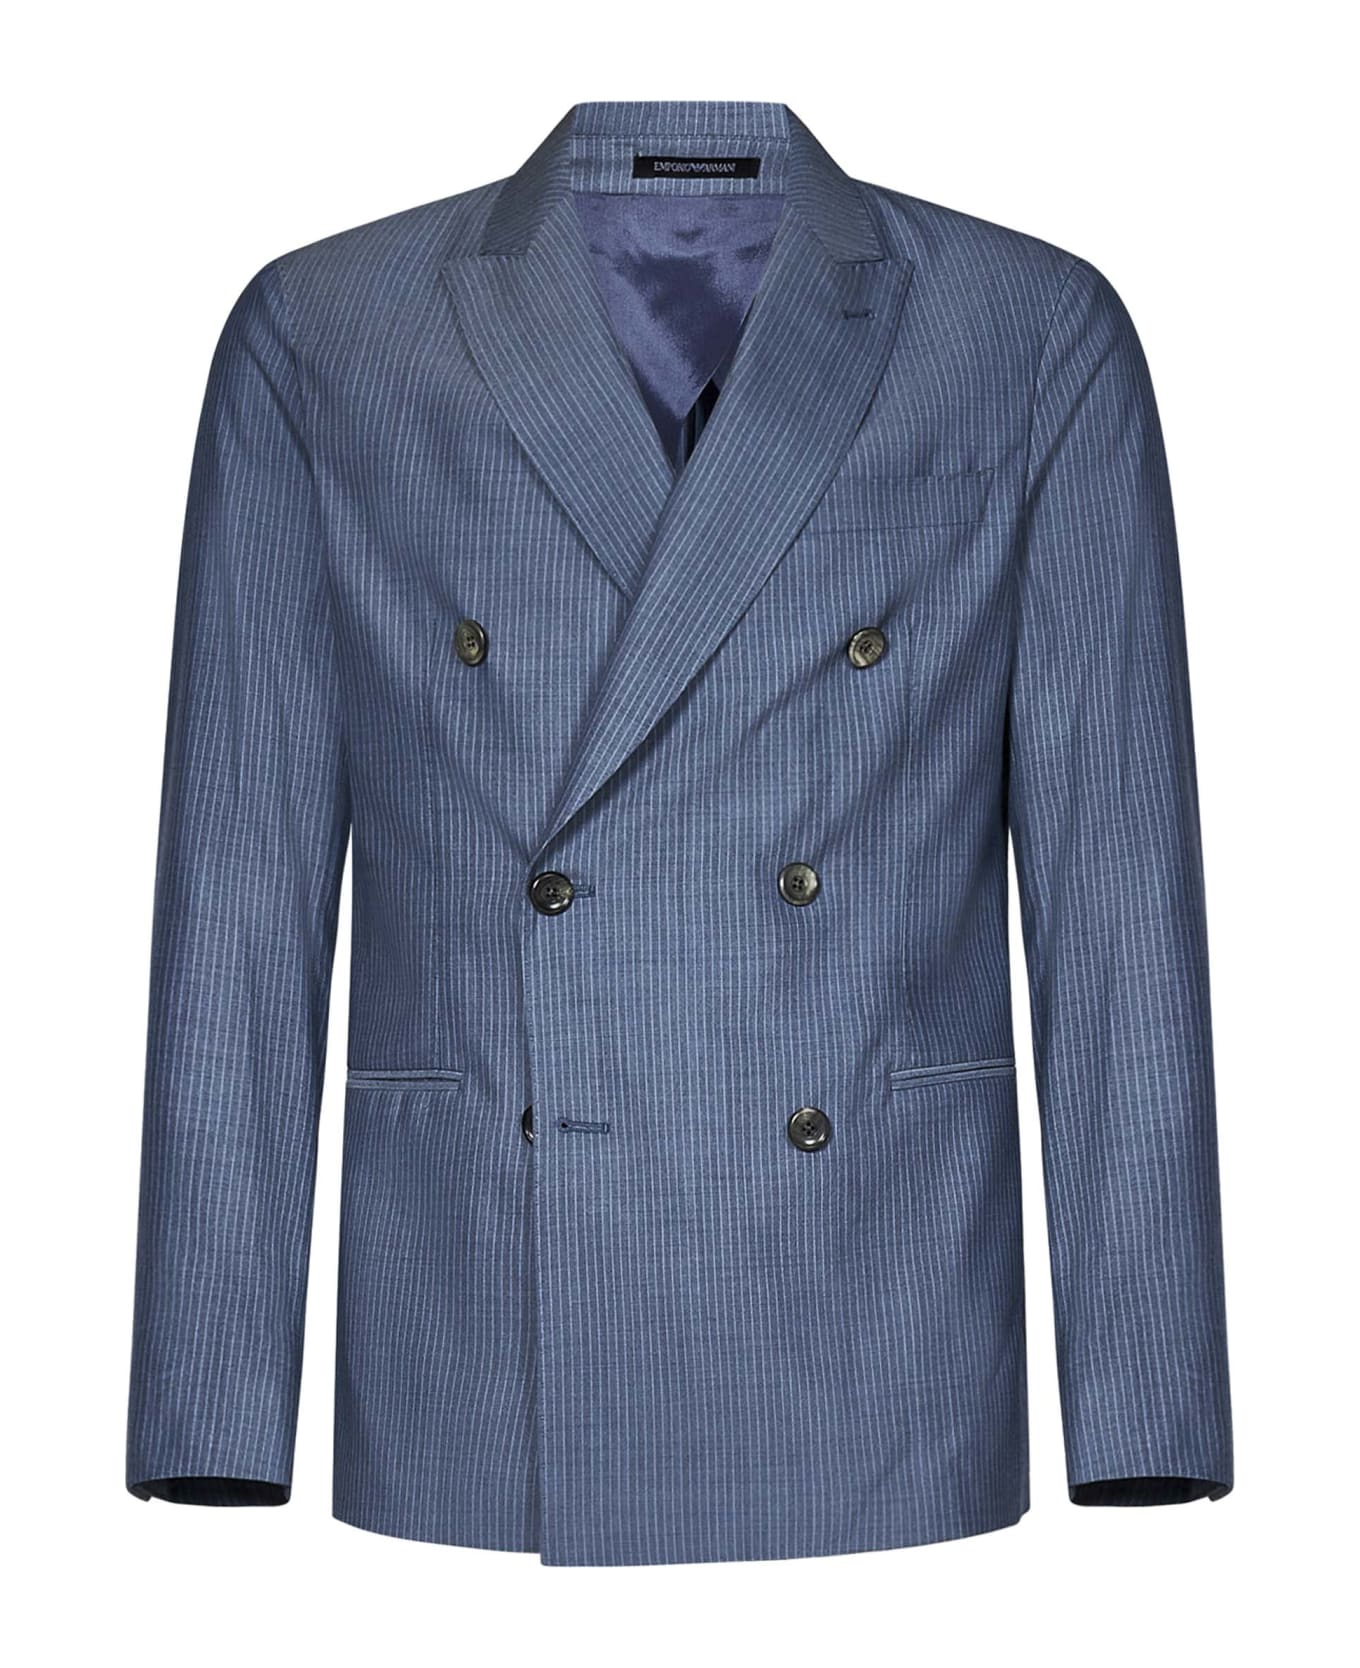 Emporio Armani Suit - Clear Blue